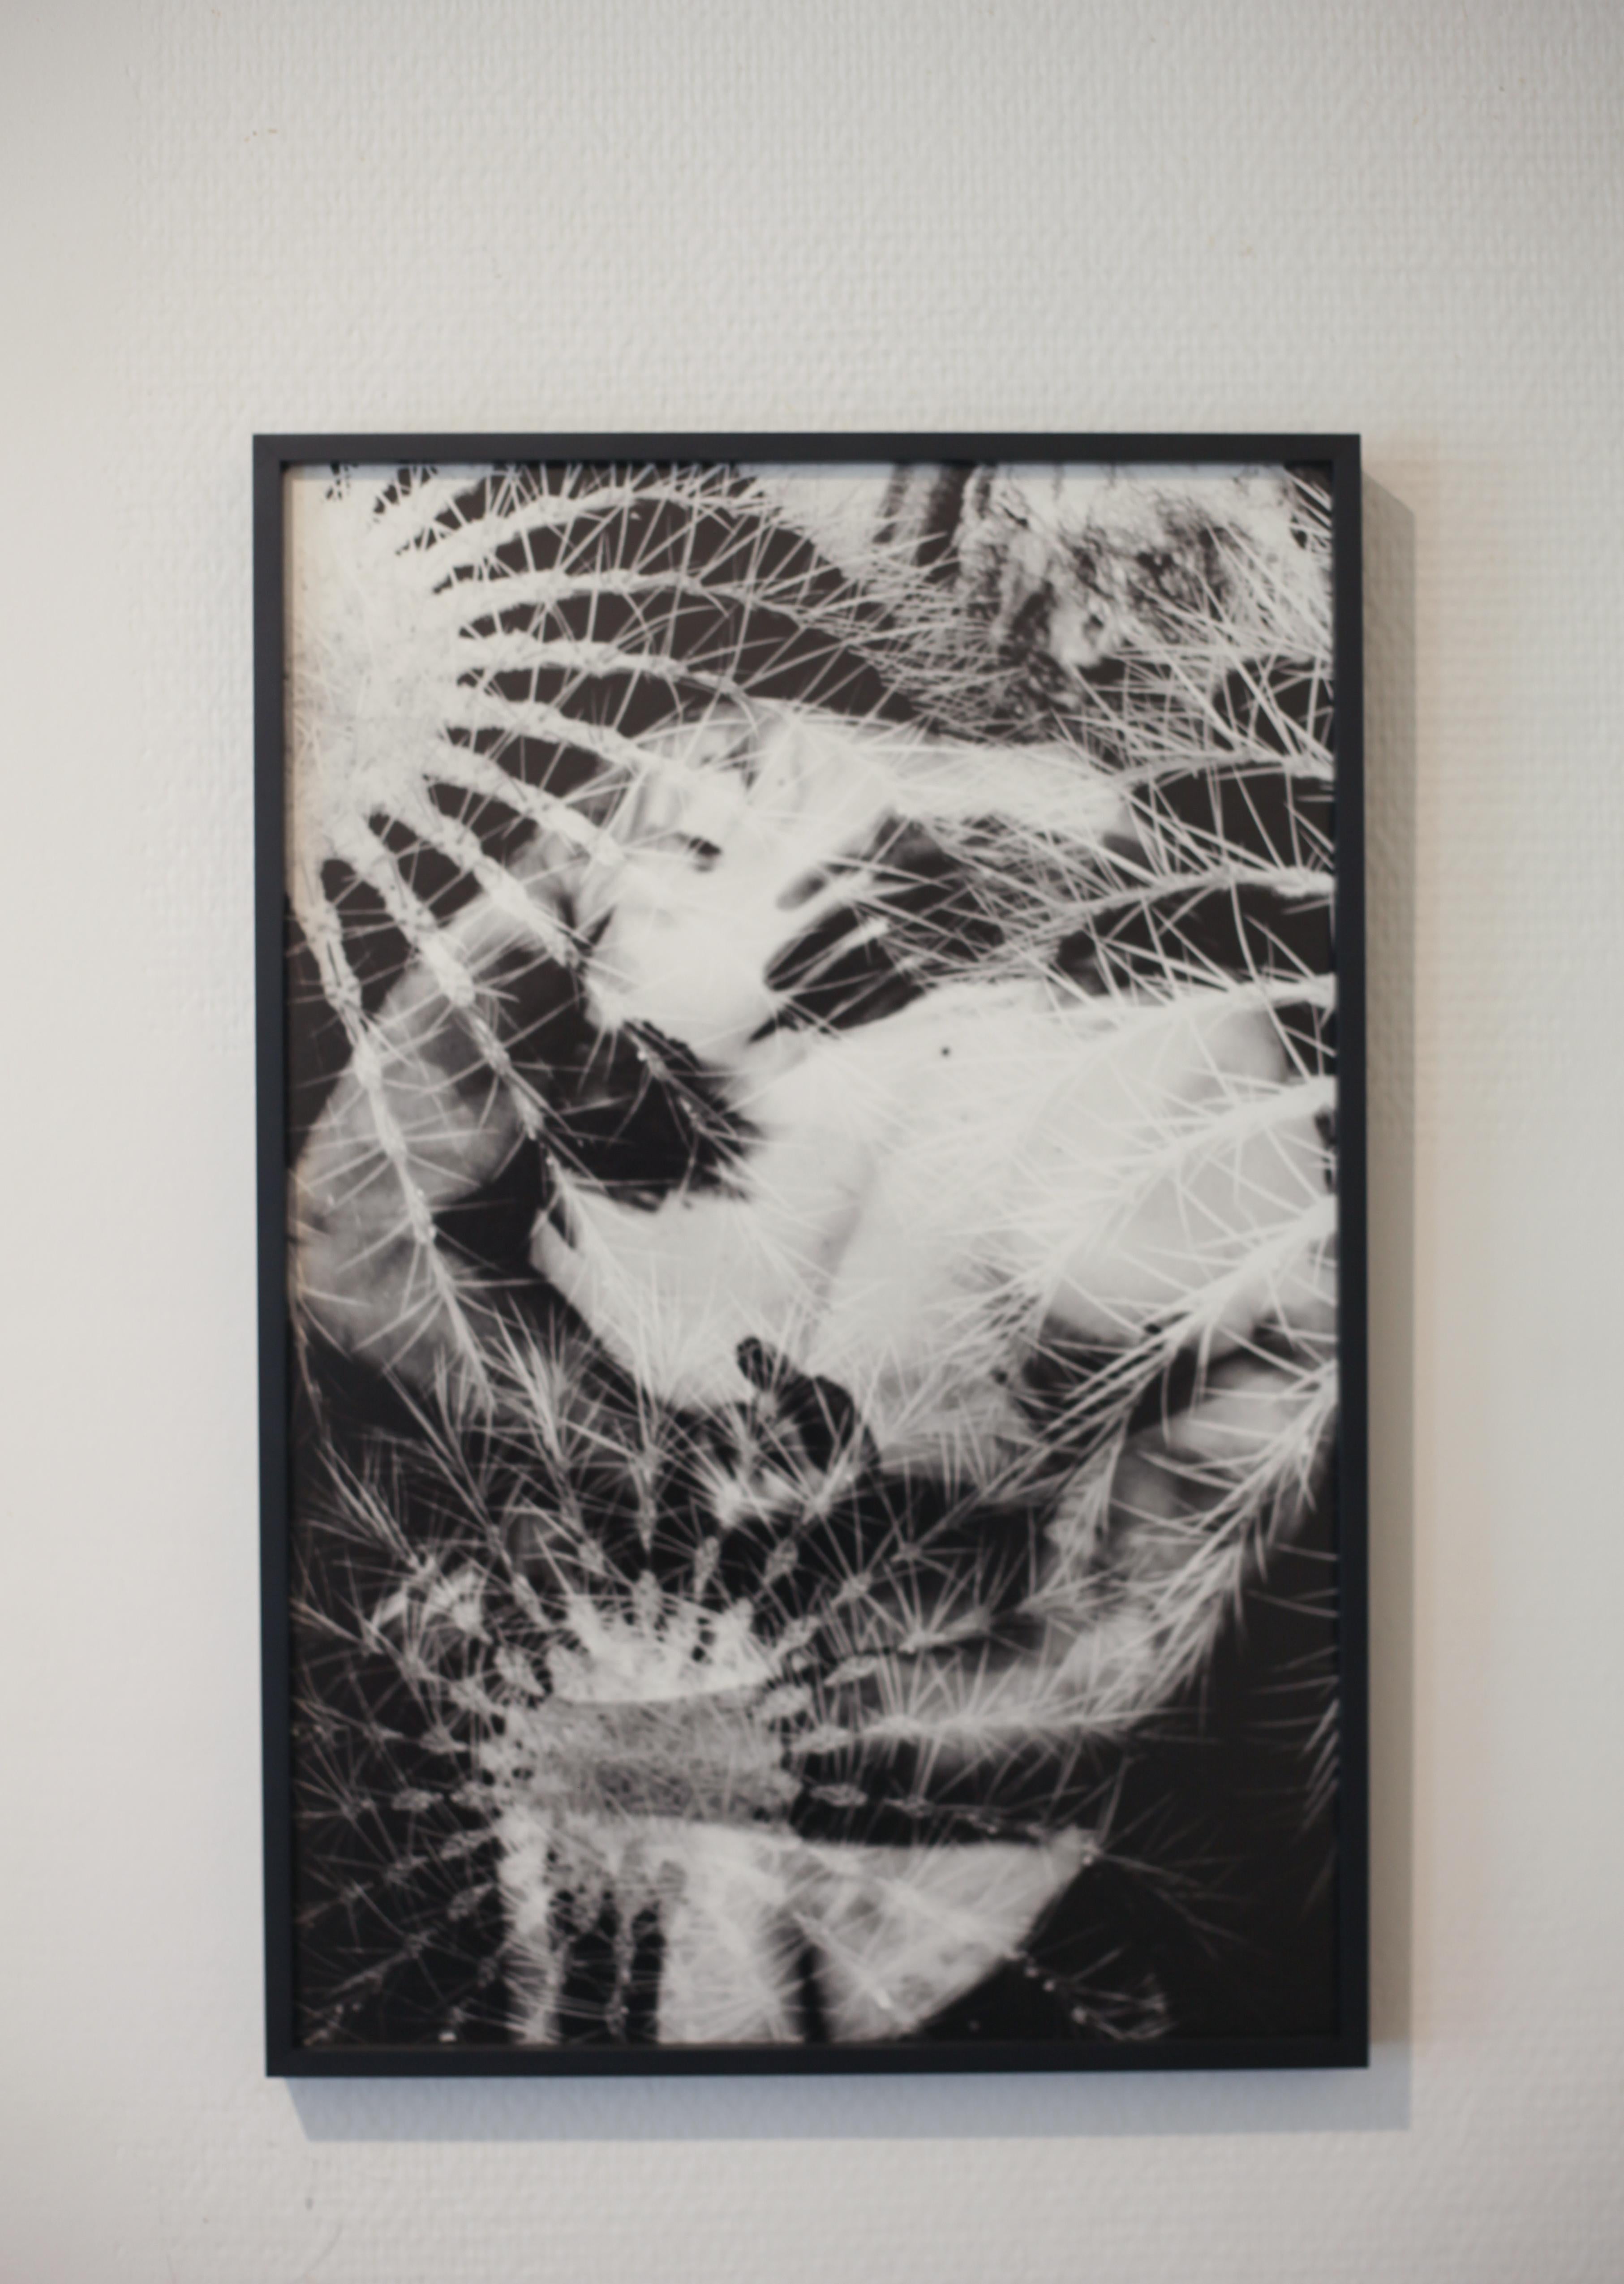 Artist : Meïdhy Bichon

- Title : Mouvements Naturels + Number

- Date : 2019

- Technique : Silver overprint (Double exposure on silver film)

- Media : Kodak Tri-X 400 film

- Dimension : 30 x 45 cm 

- Limited edition of 10 prints

- Price : 390€